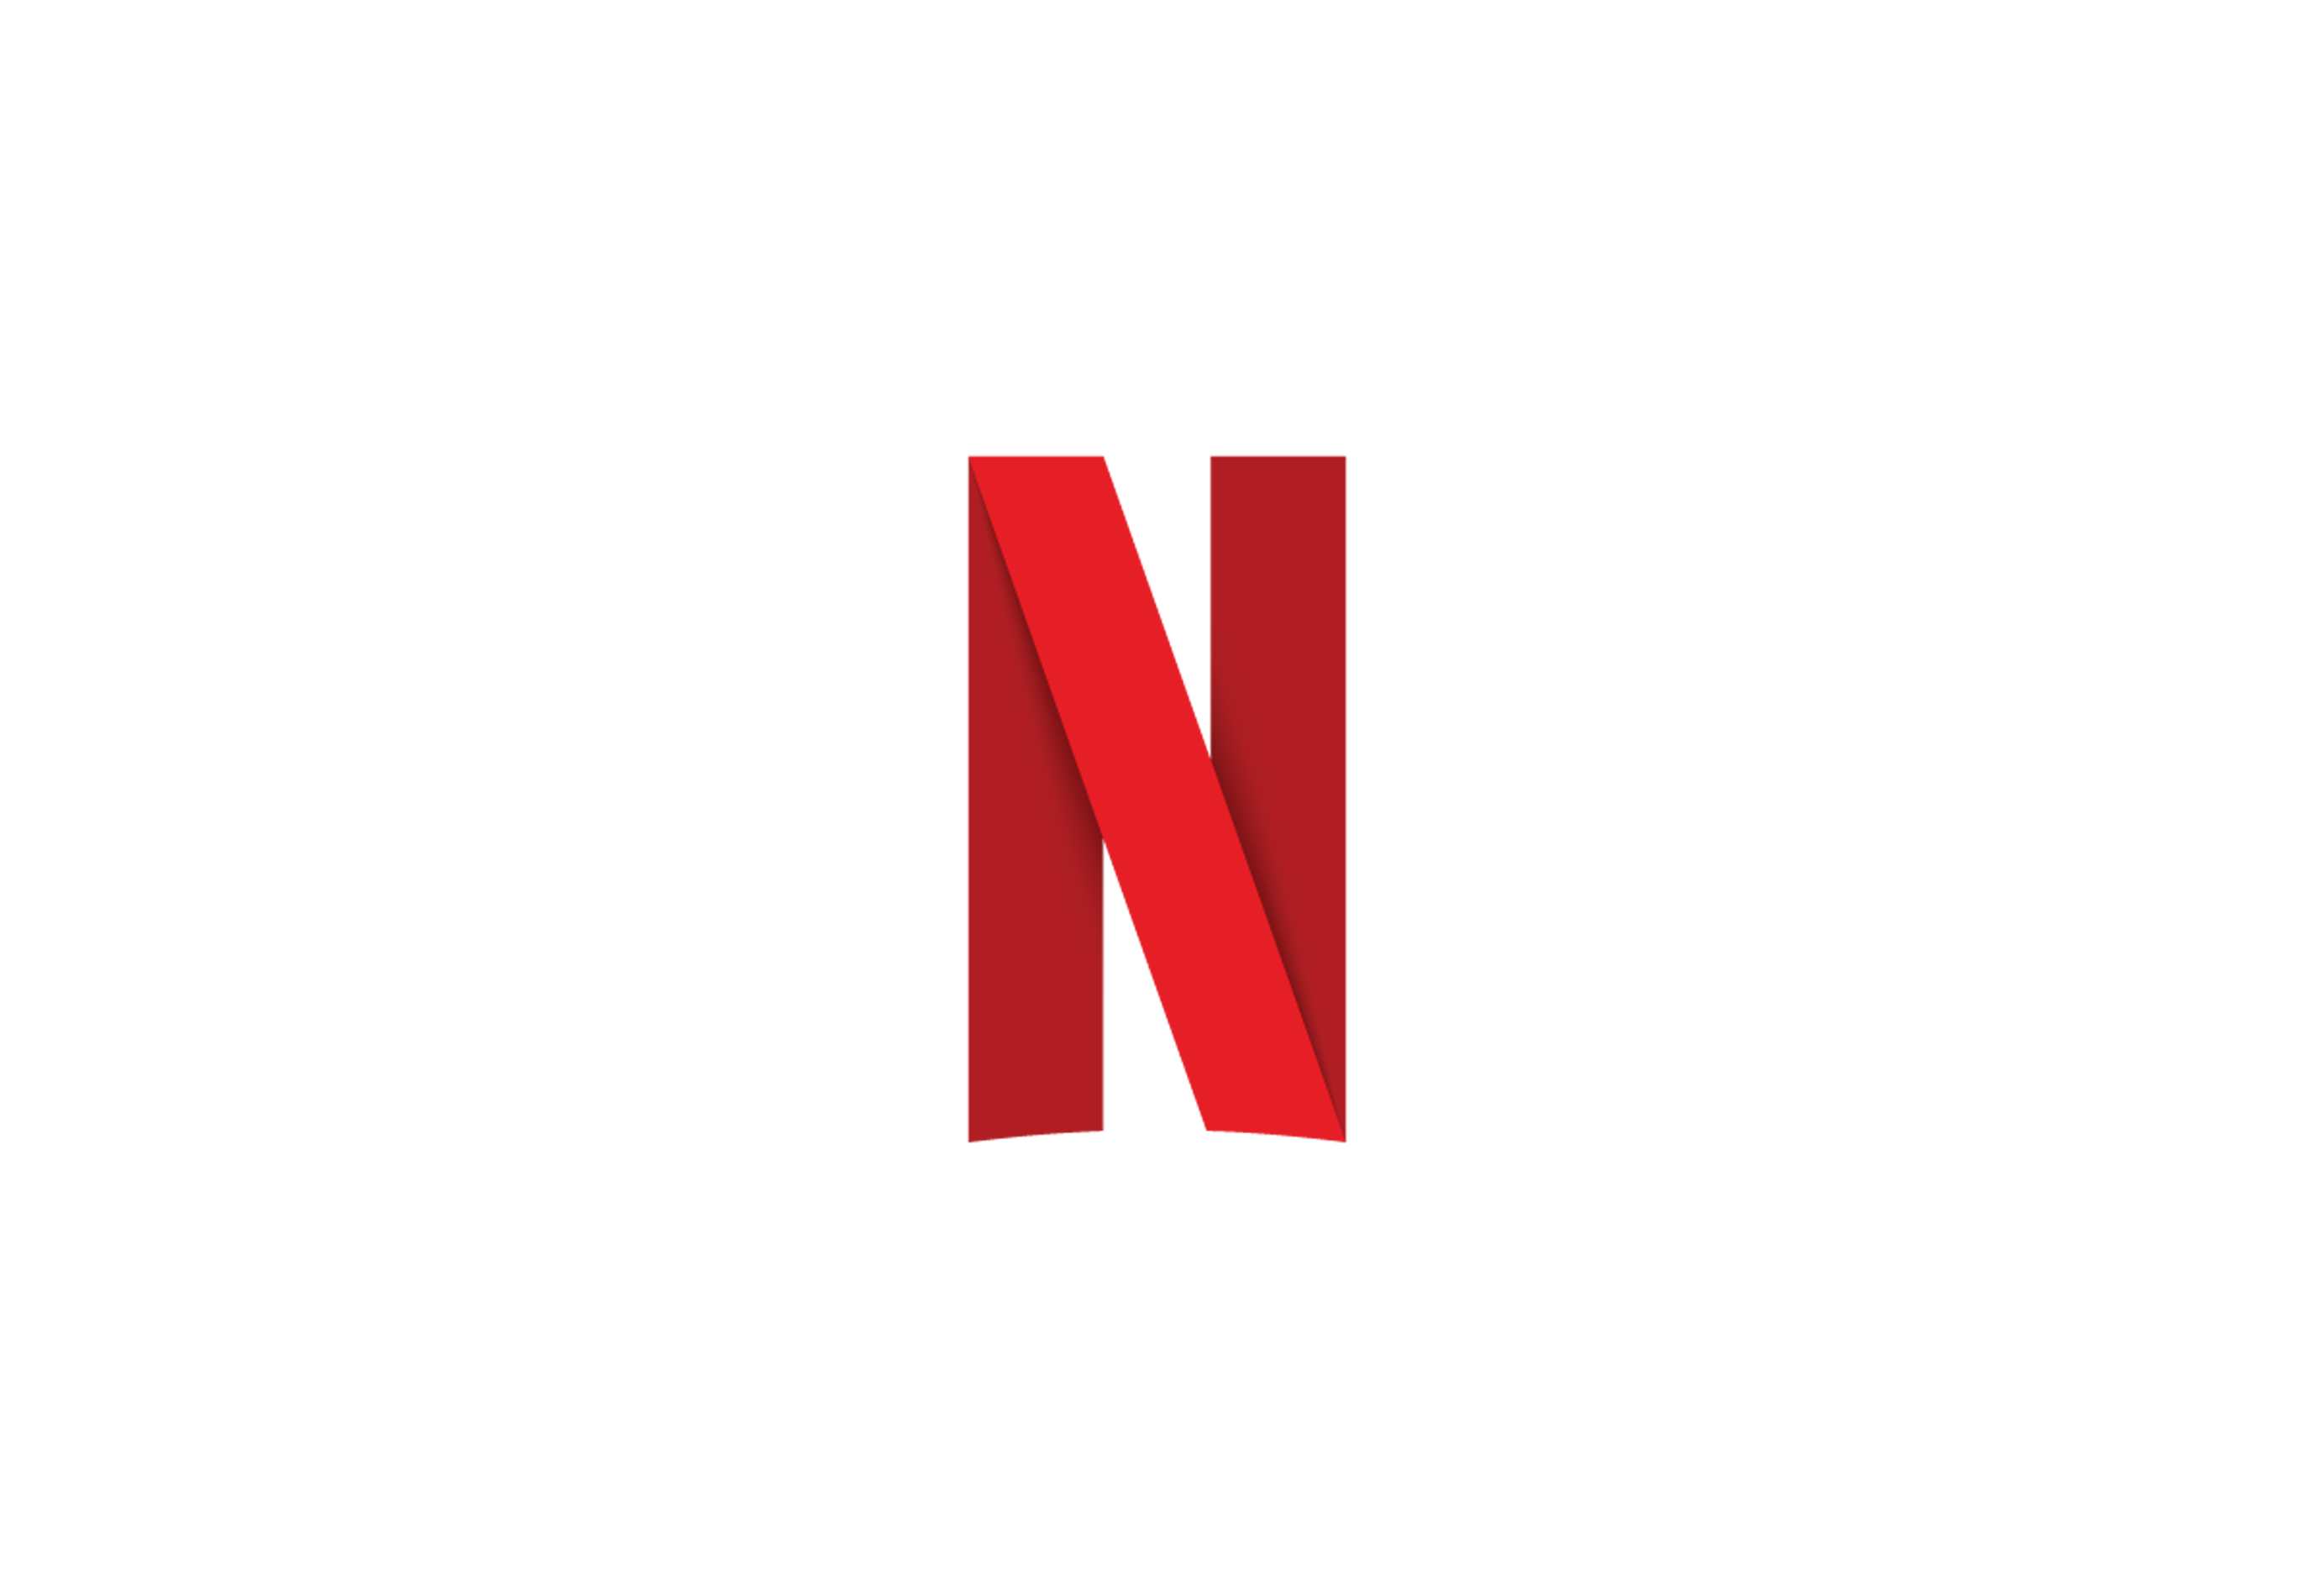 Netflix logo and symbol  Design history and evolution